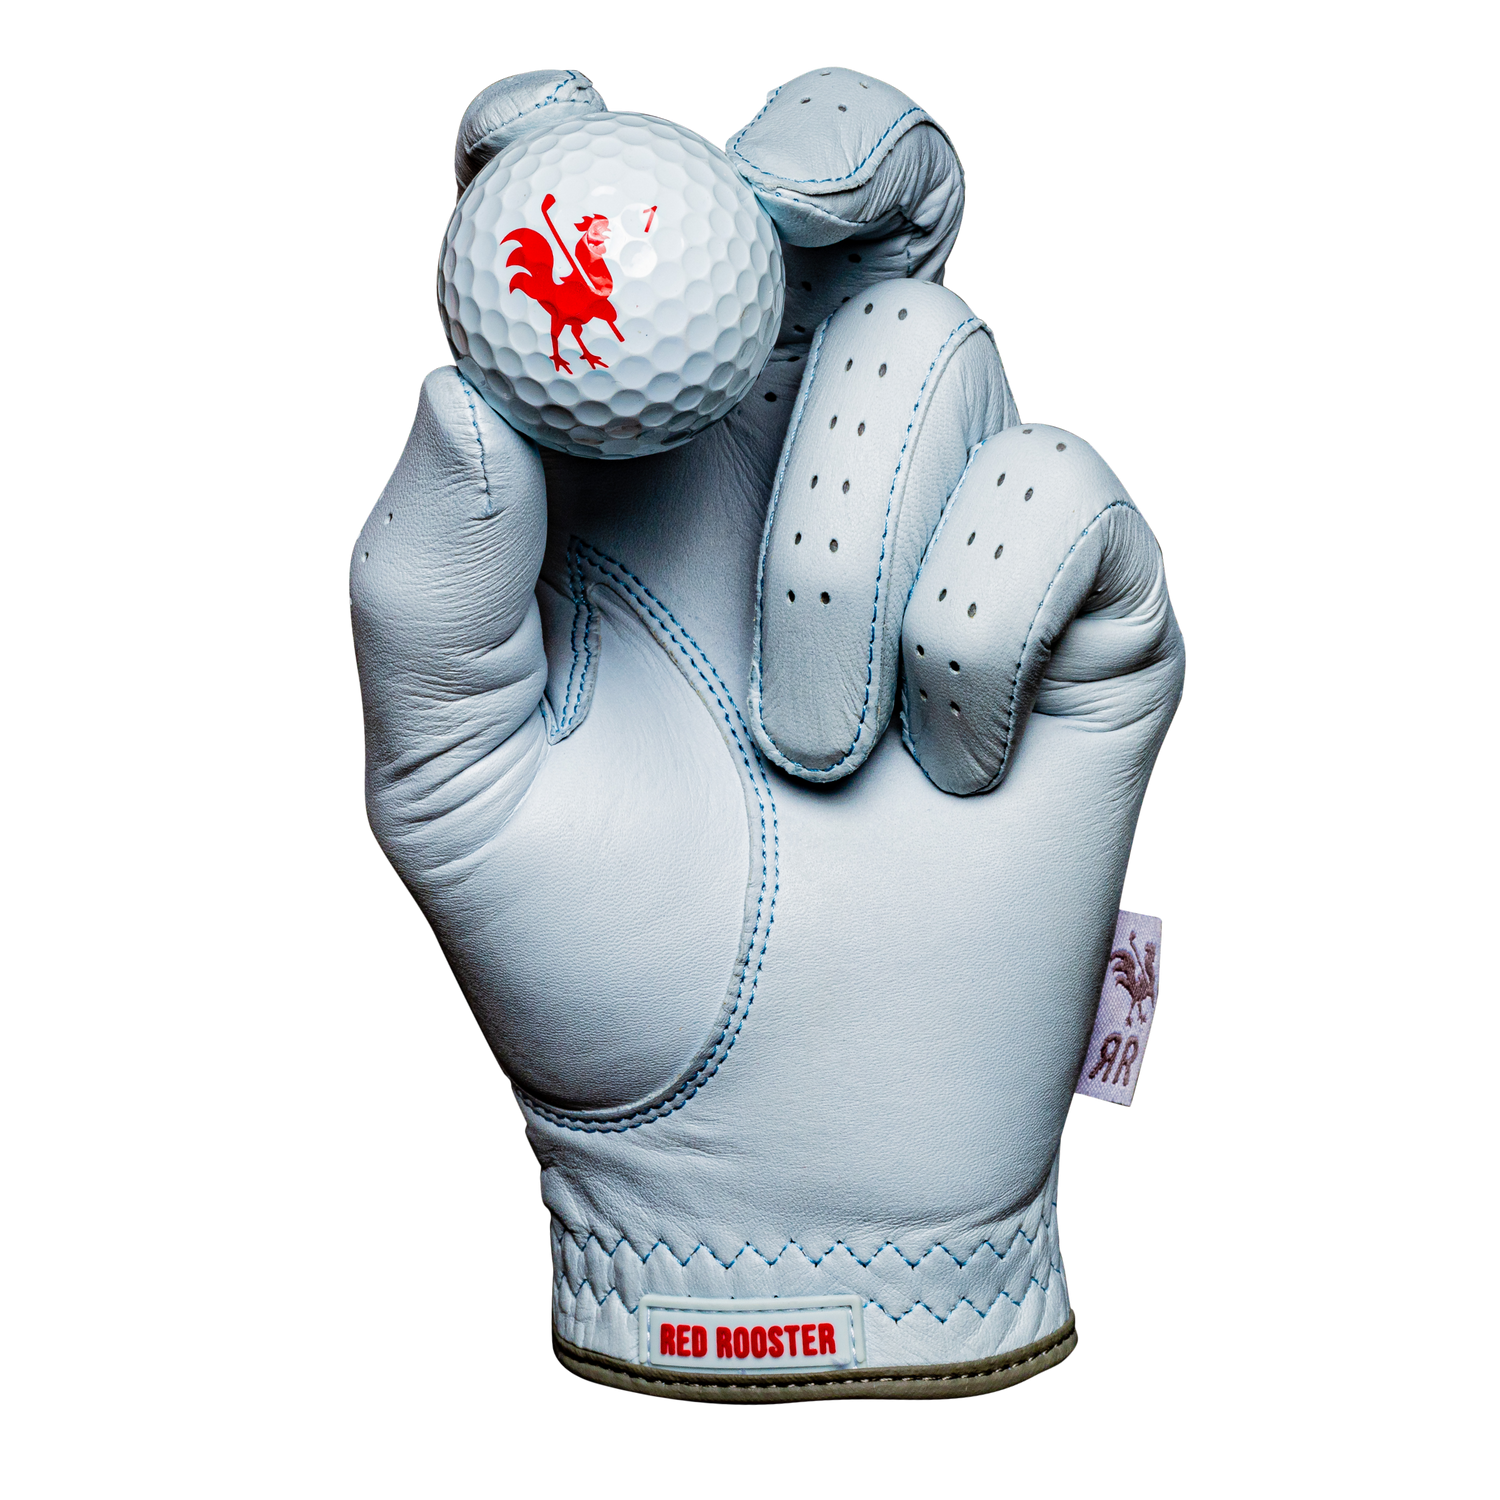 The Sultan golf glove holding  golf ball